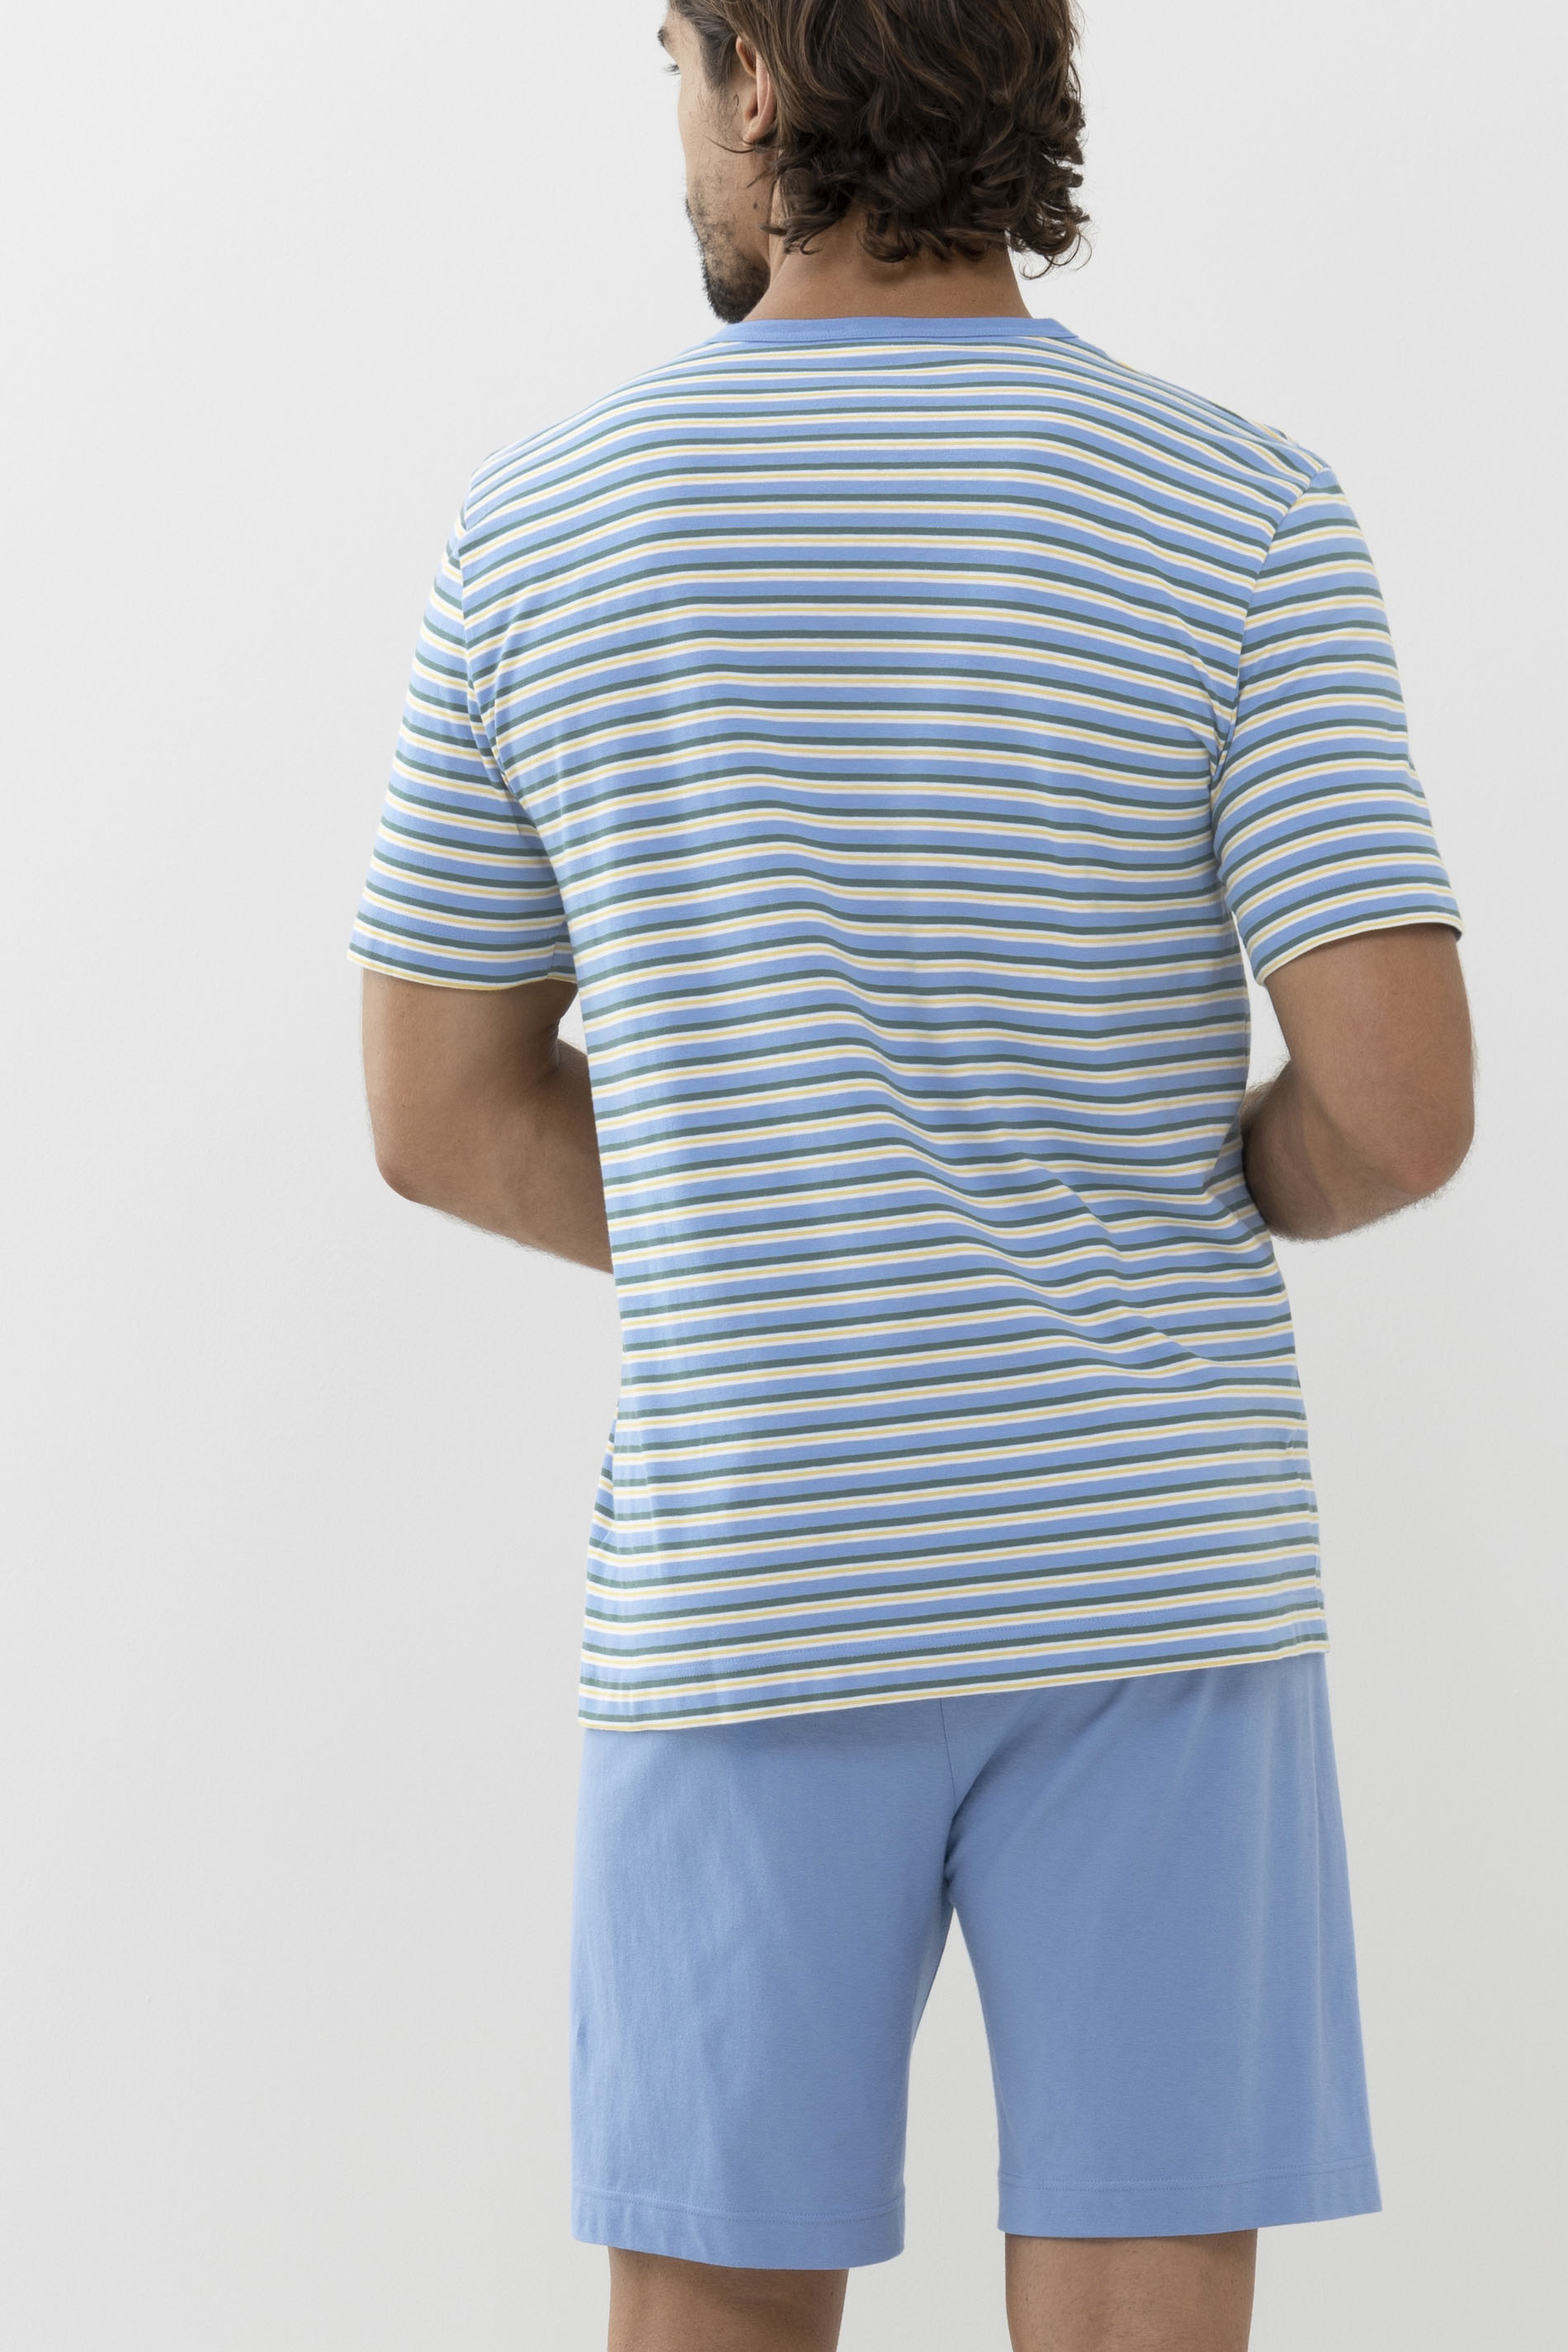 Pyjamas Serie Cross Stripe Achteraanzicht | mey®